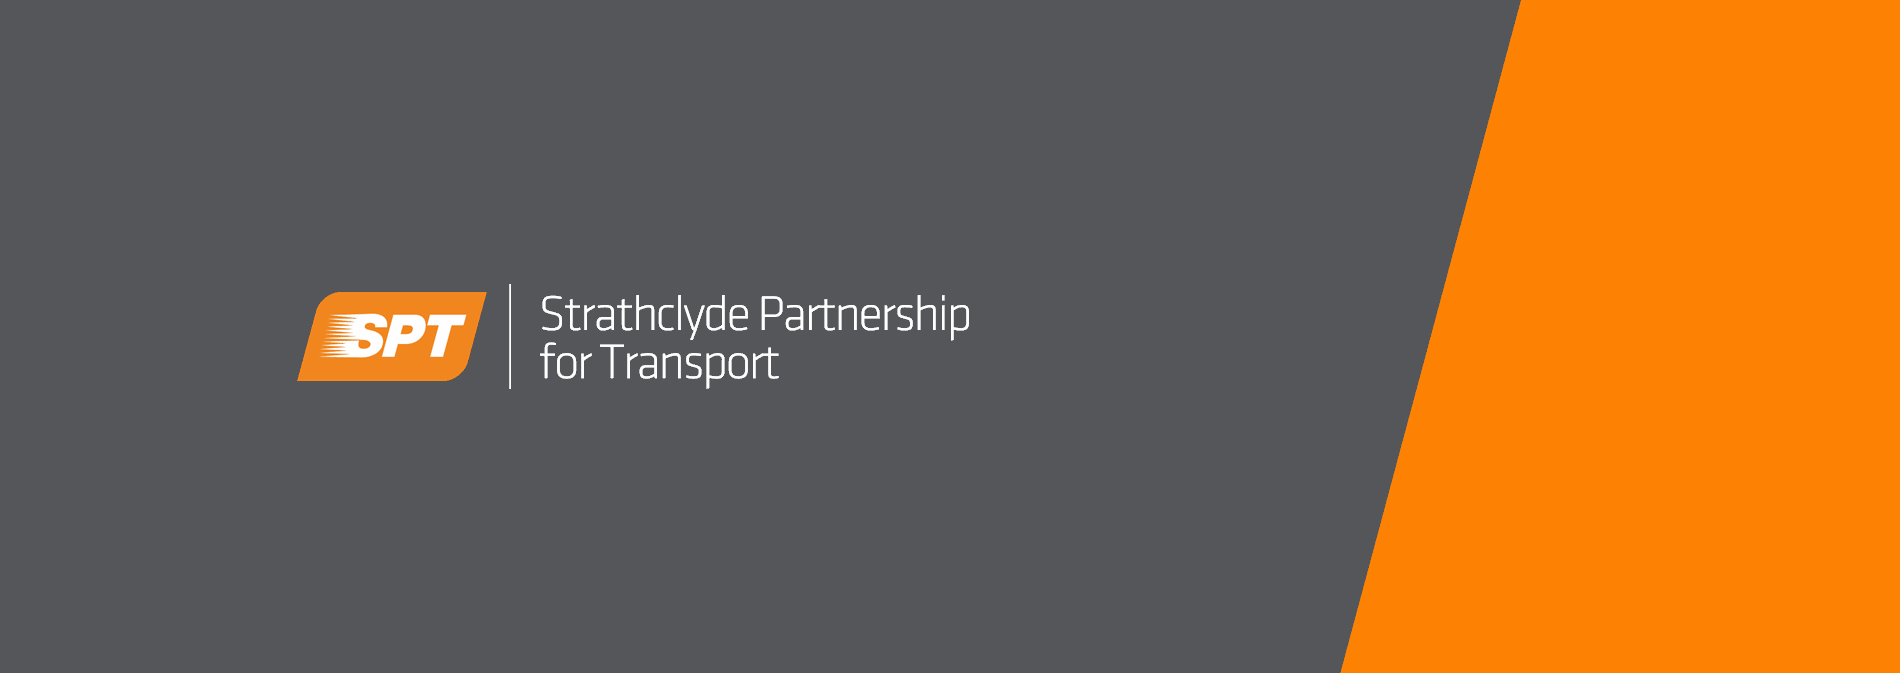 Strathclyde Partnership for Transport